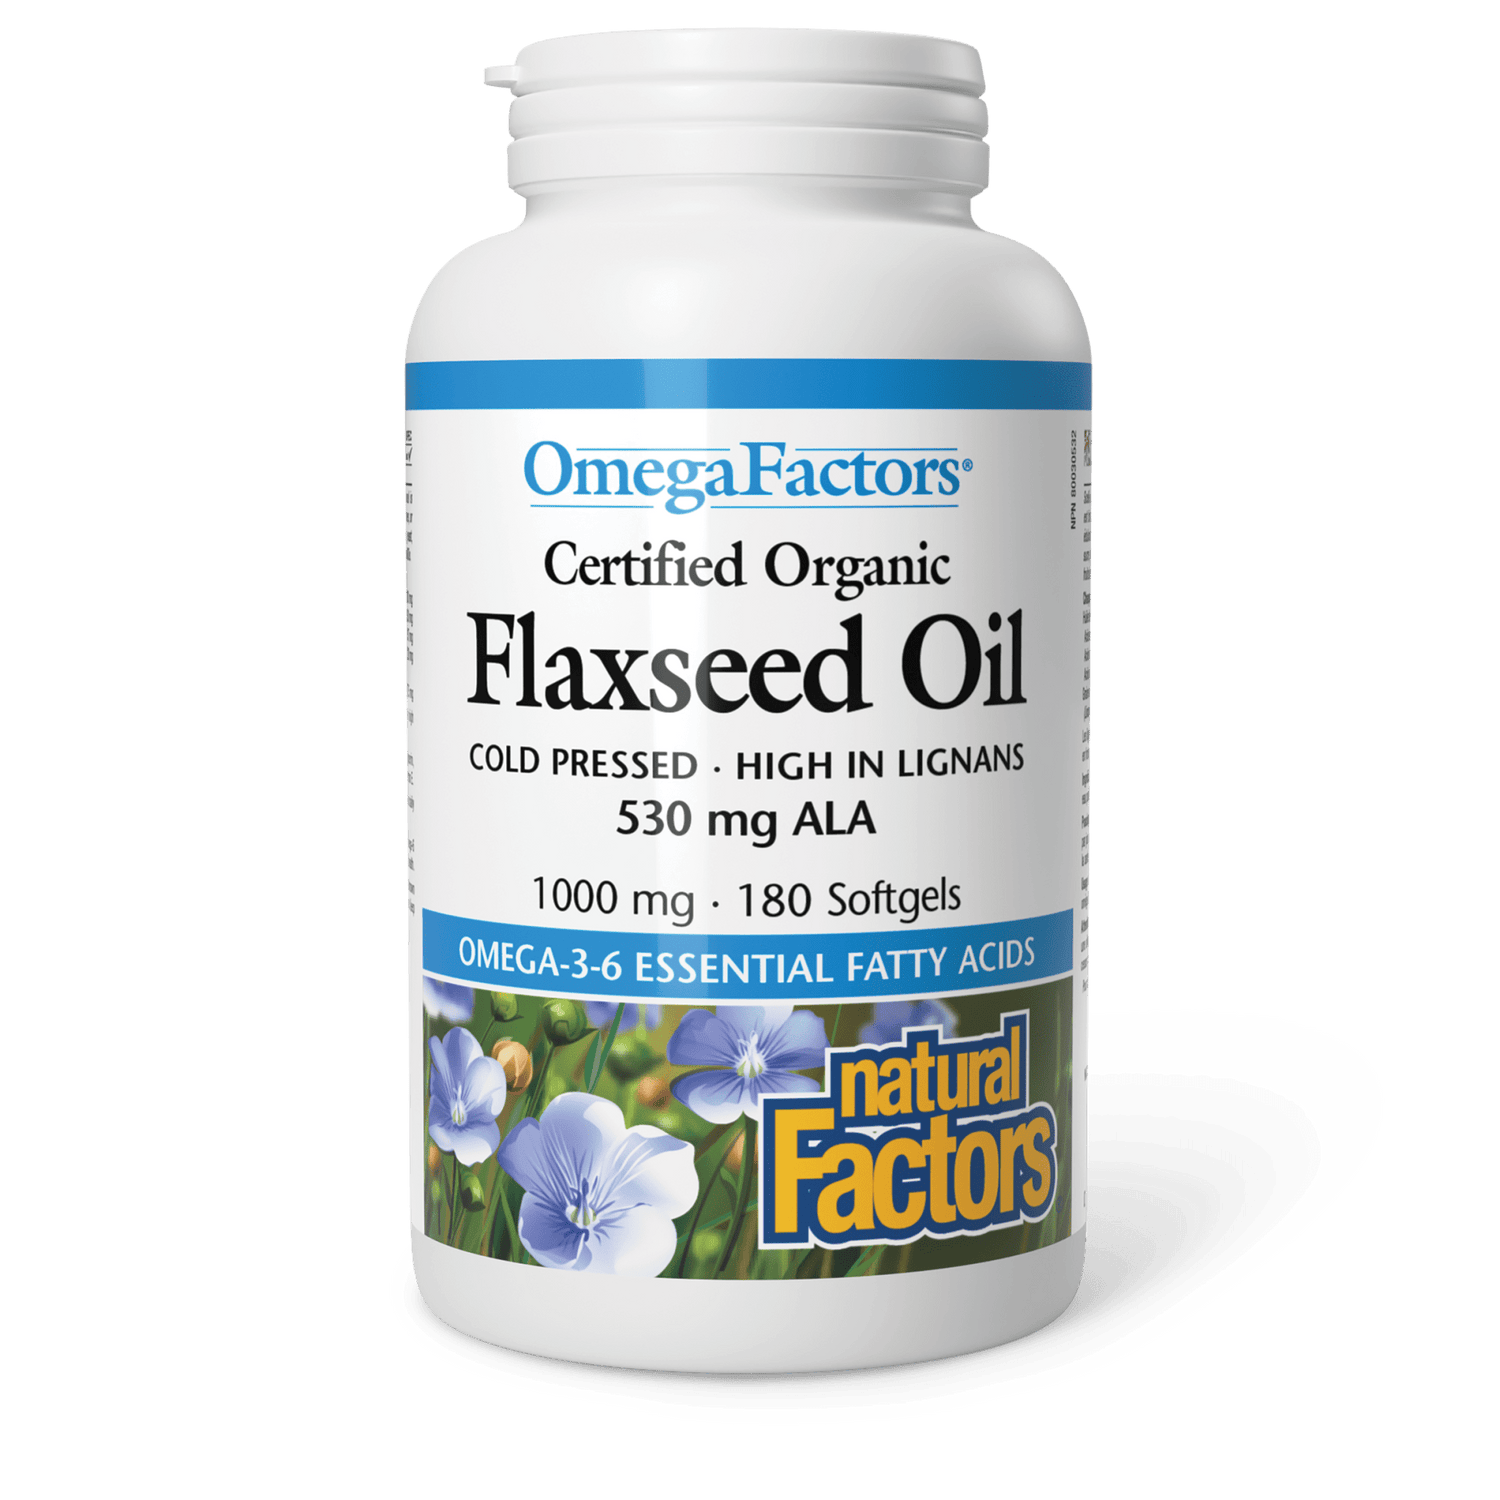 Flaxseed Oil Certified Organic 1000 mg, OmegaFactors, Natural Factors|v|image|2211